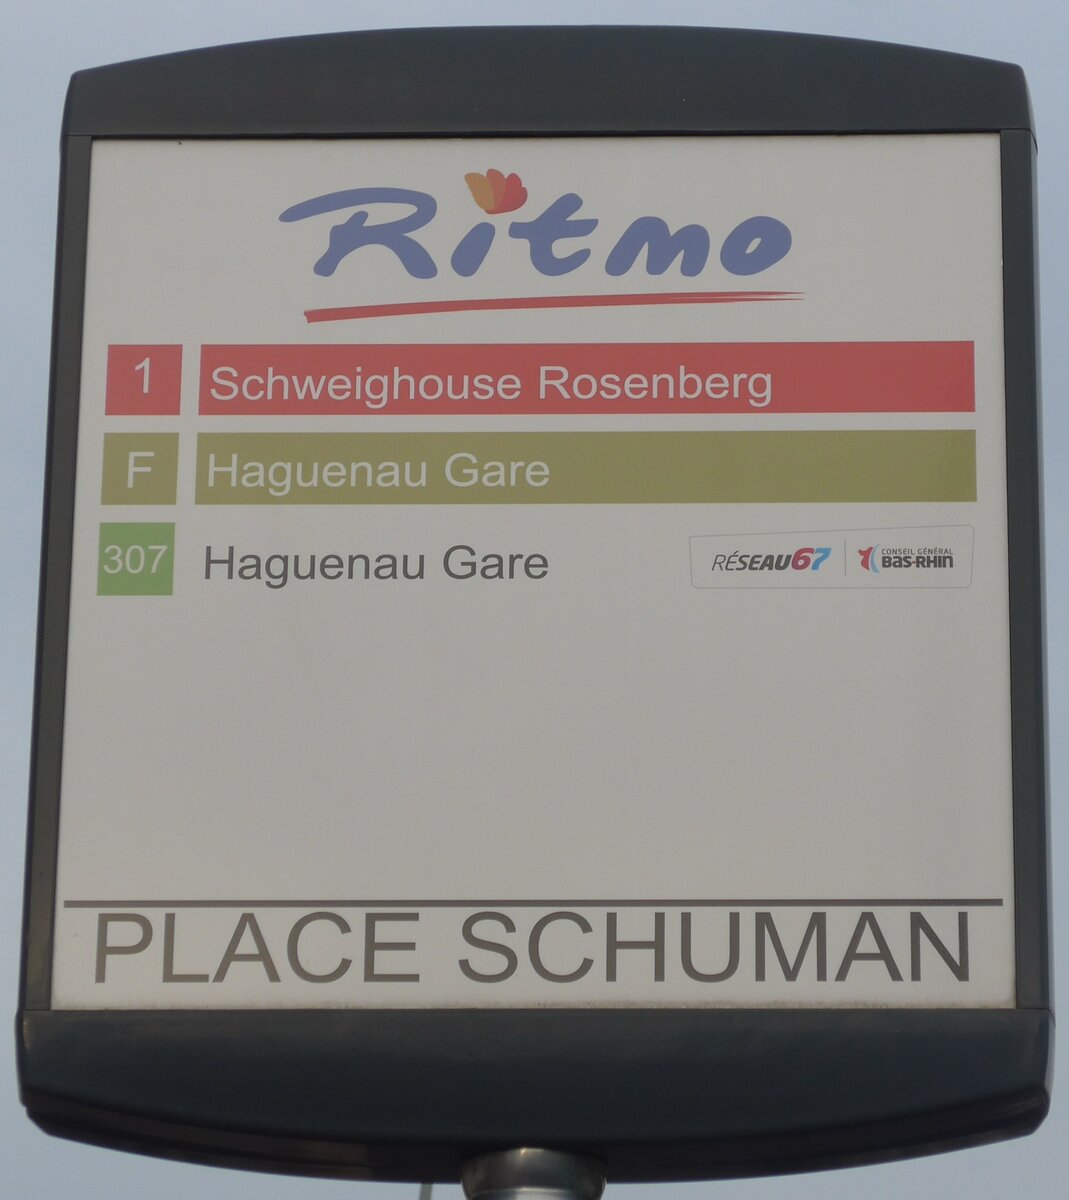 (204'125) - Ritmo/RSEAU67/Conseil Gnral Bas-Rhin-Haltestellenschild - Haguenau, Place Schuman - am 26. April 2019